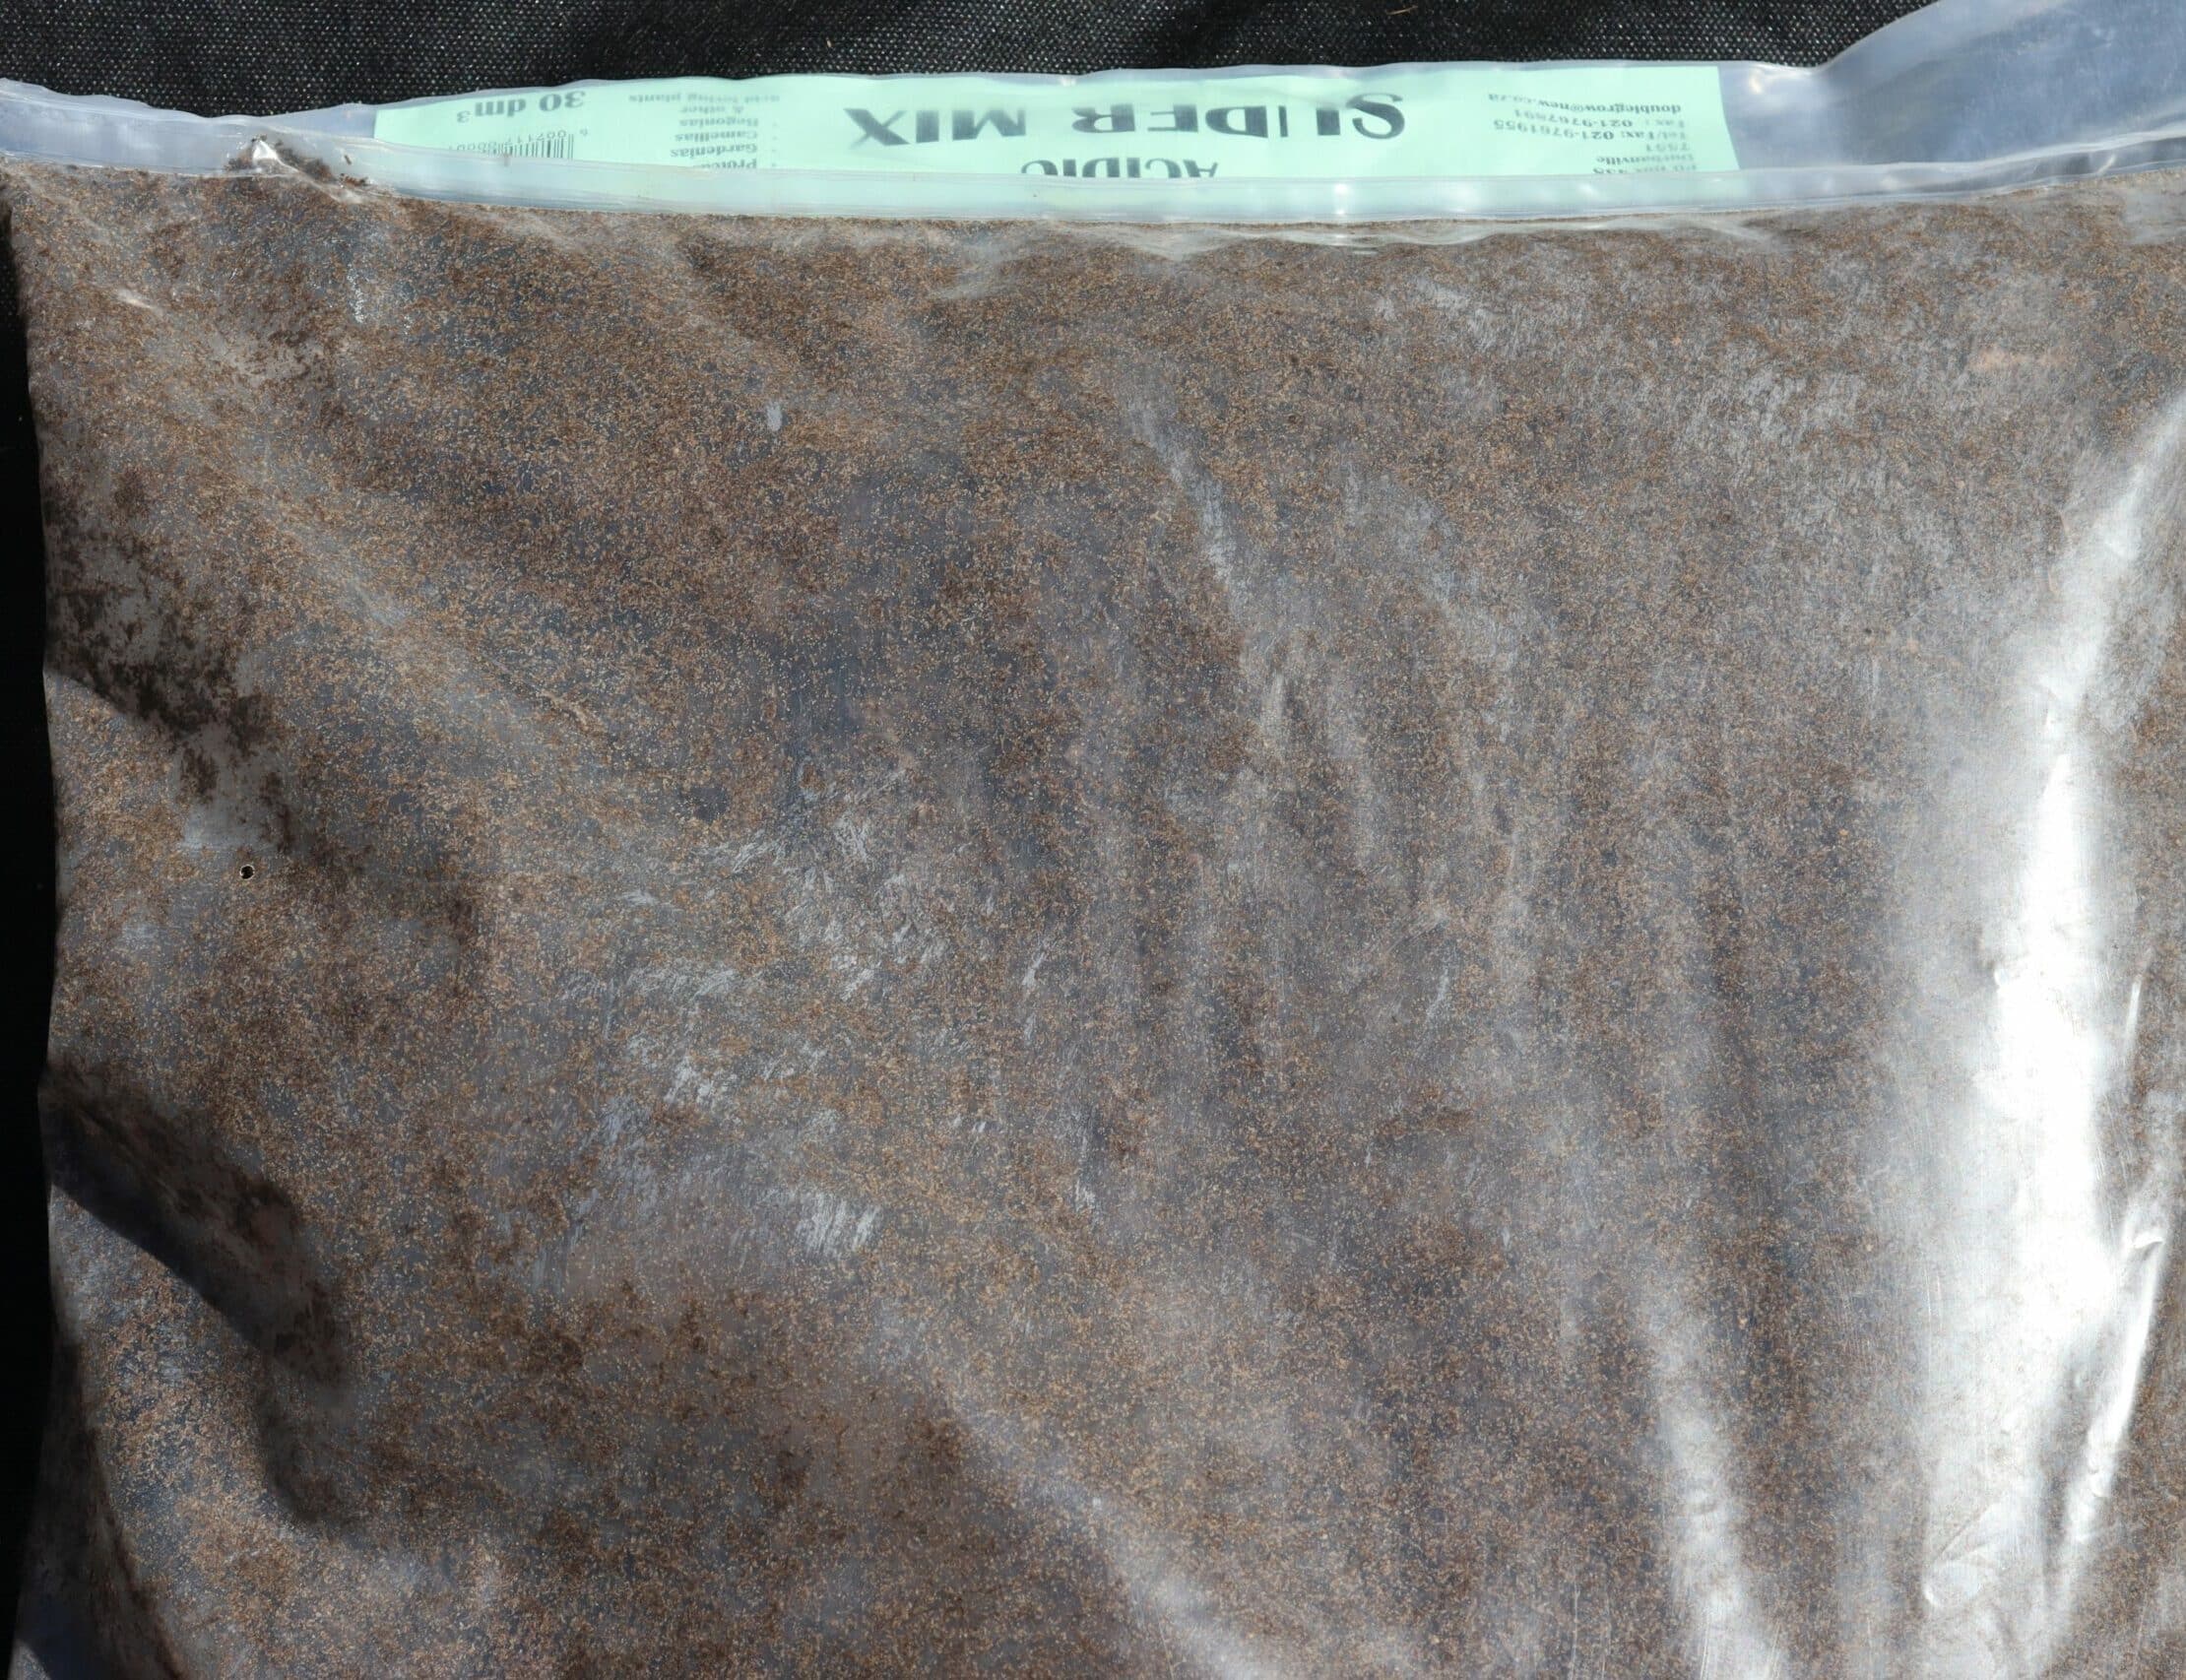 A plastic bag of Double Grow acidic super mix for acidic plants.